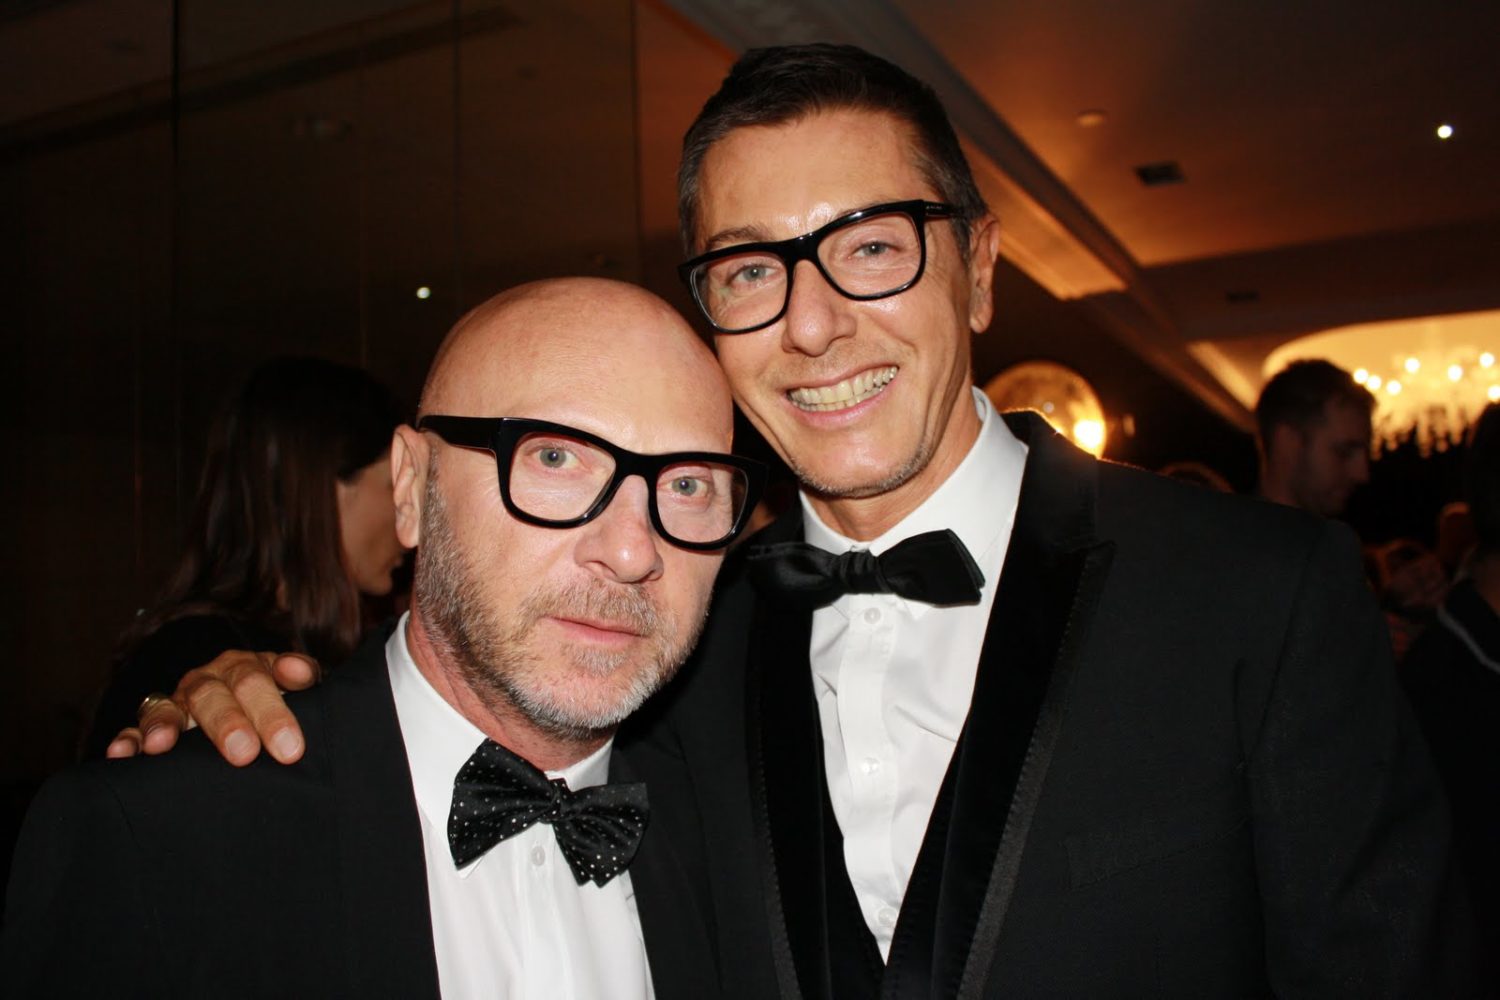 Dolce&Gabbana founders apologies to China | News365.co.za